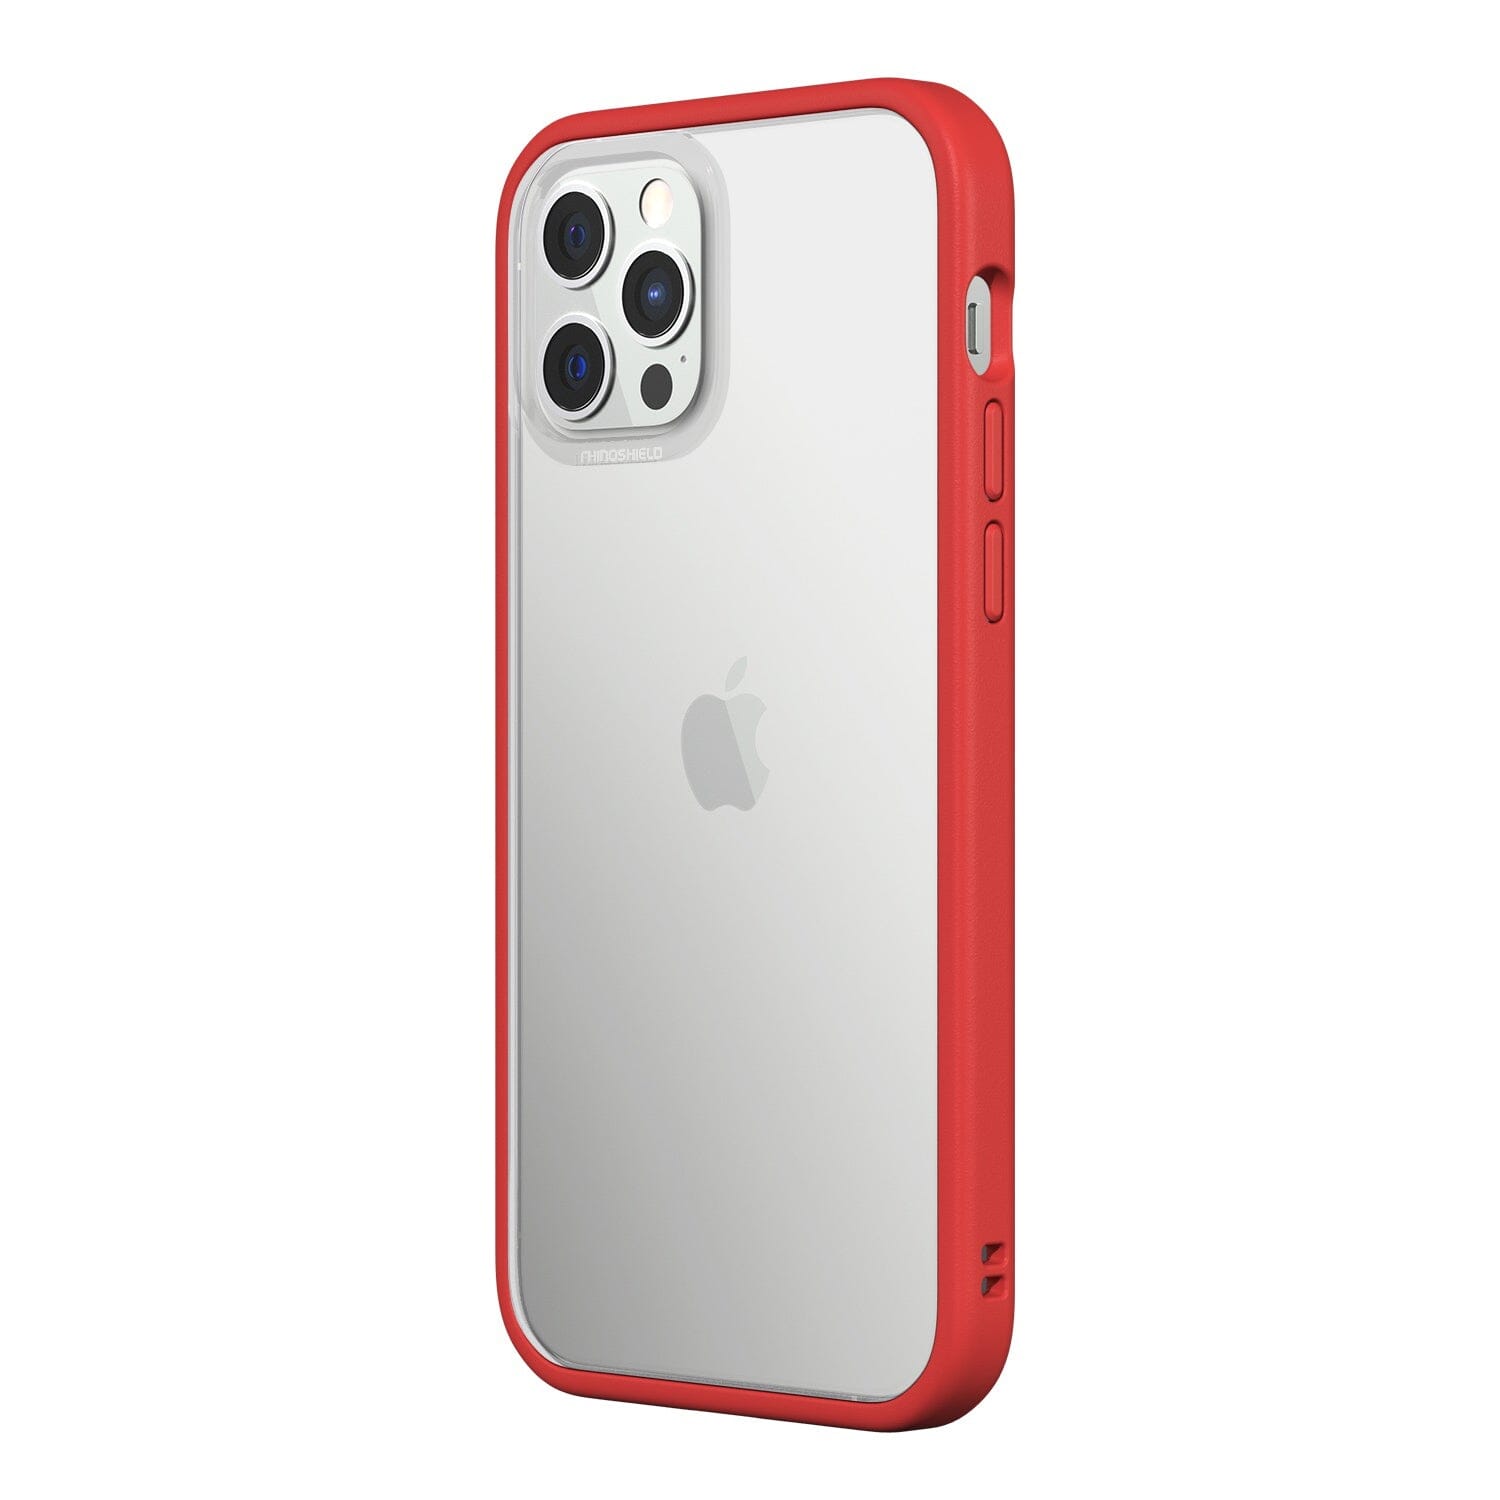 RhinoShield Mod NX Modular Case for iPhone 12 Series (2020) iPhone 12 Series RhinoShield iPhone 12/12 Pro 6.1" Red 